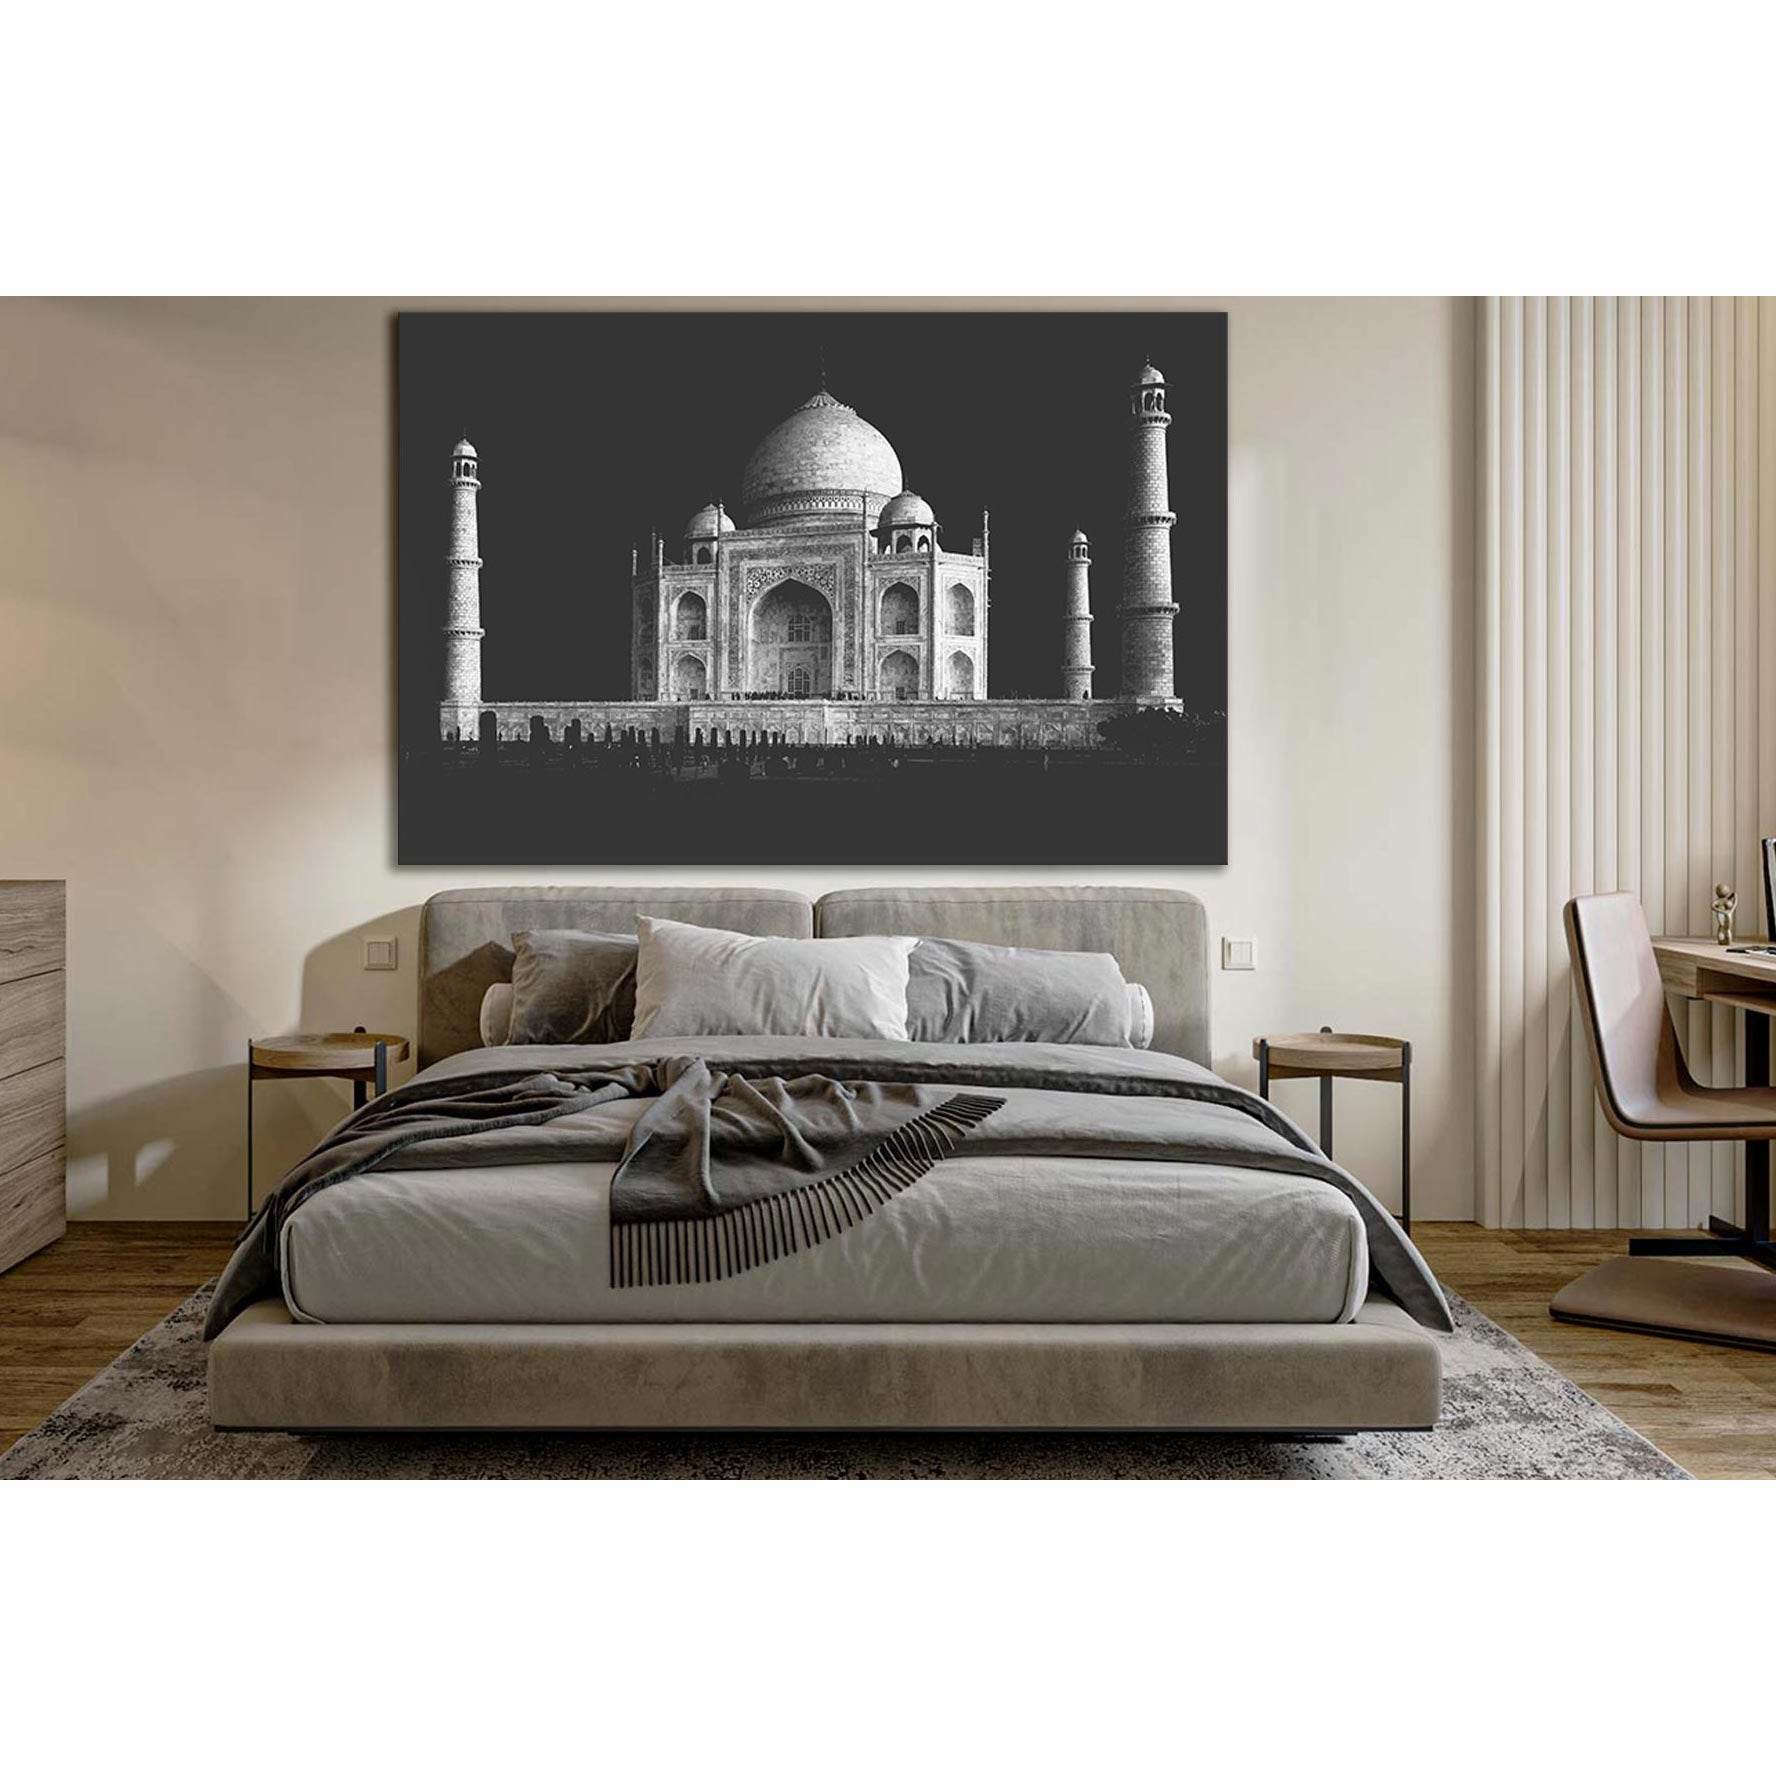 Taj Mahal Black and White №SL1389 Ready to Hang Canvas Print